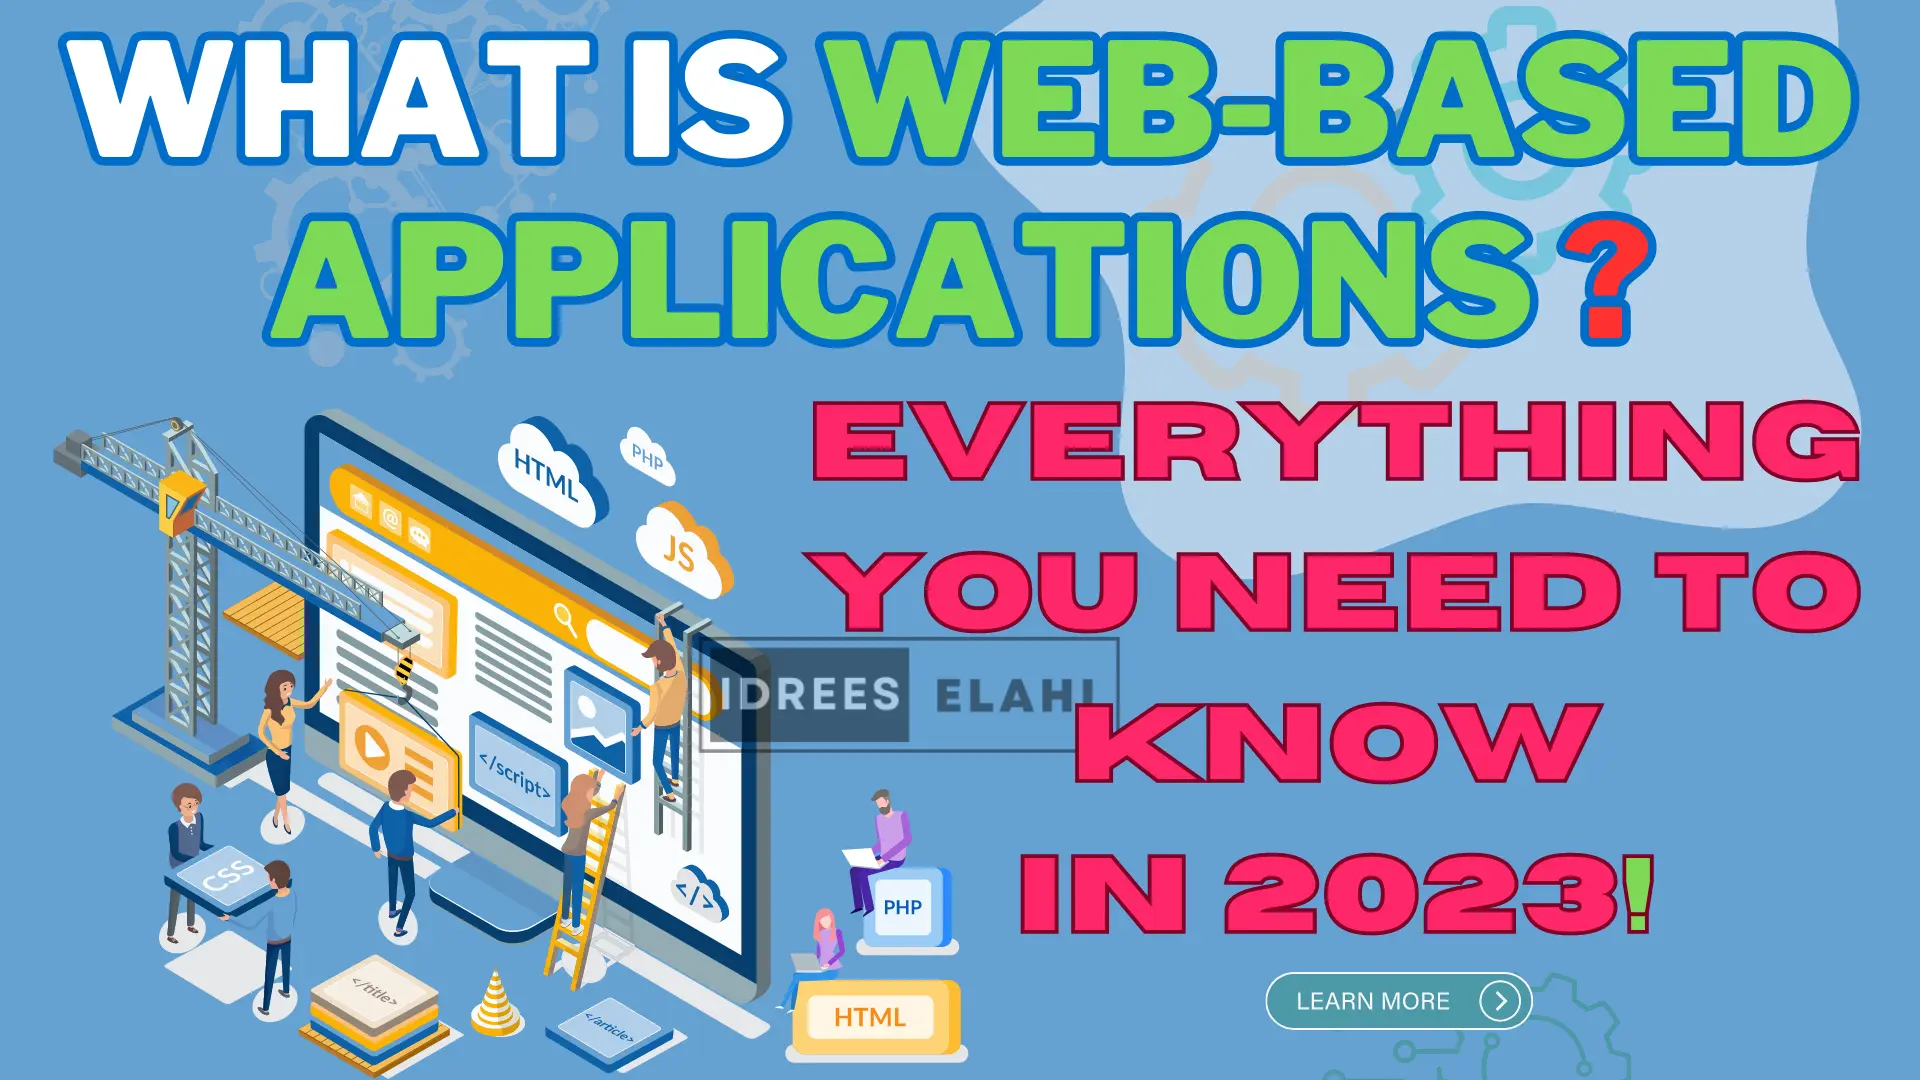 web-based applications Idreeselahi.in